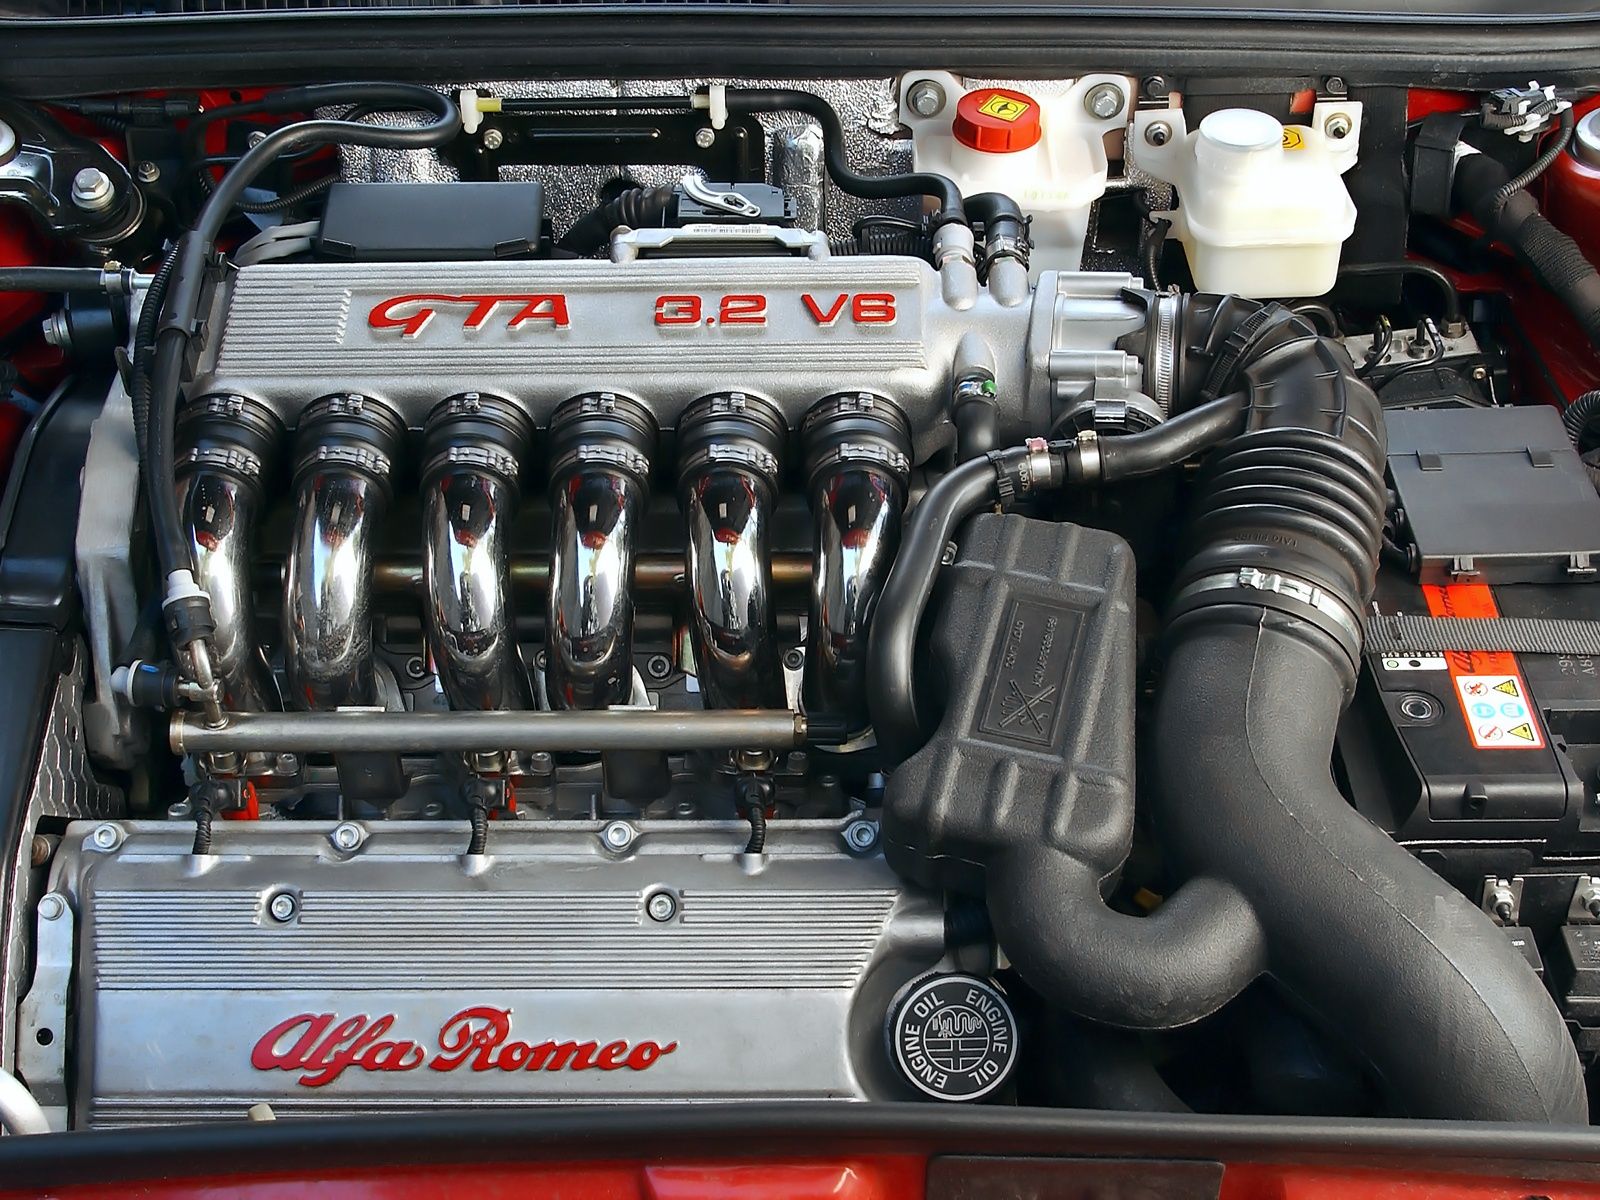 147 Gta engine